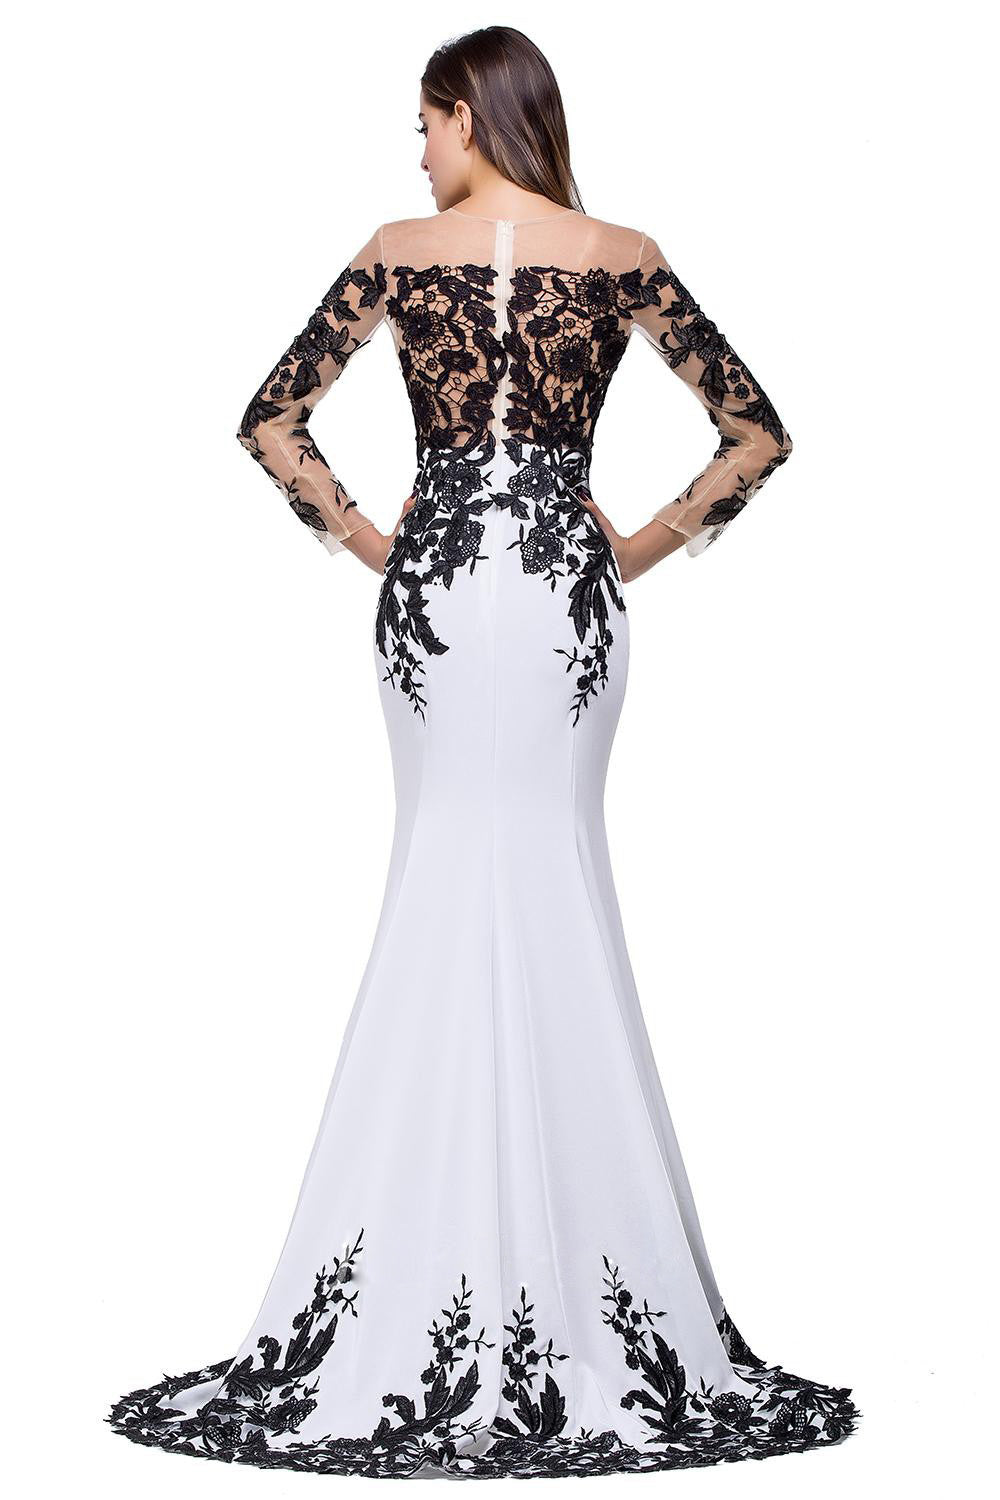 Elegant White Satin Mermaid Long Prom Dress Chic Black Lace Evening Gown WP441